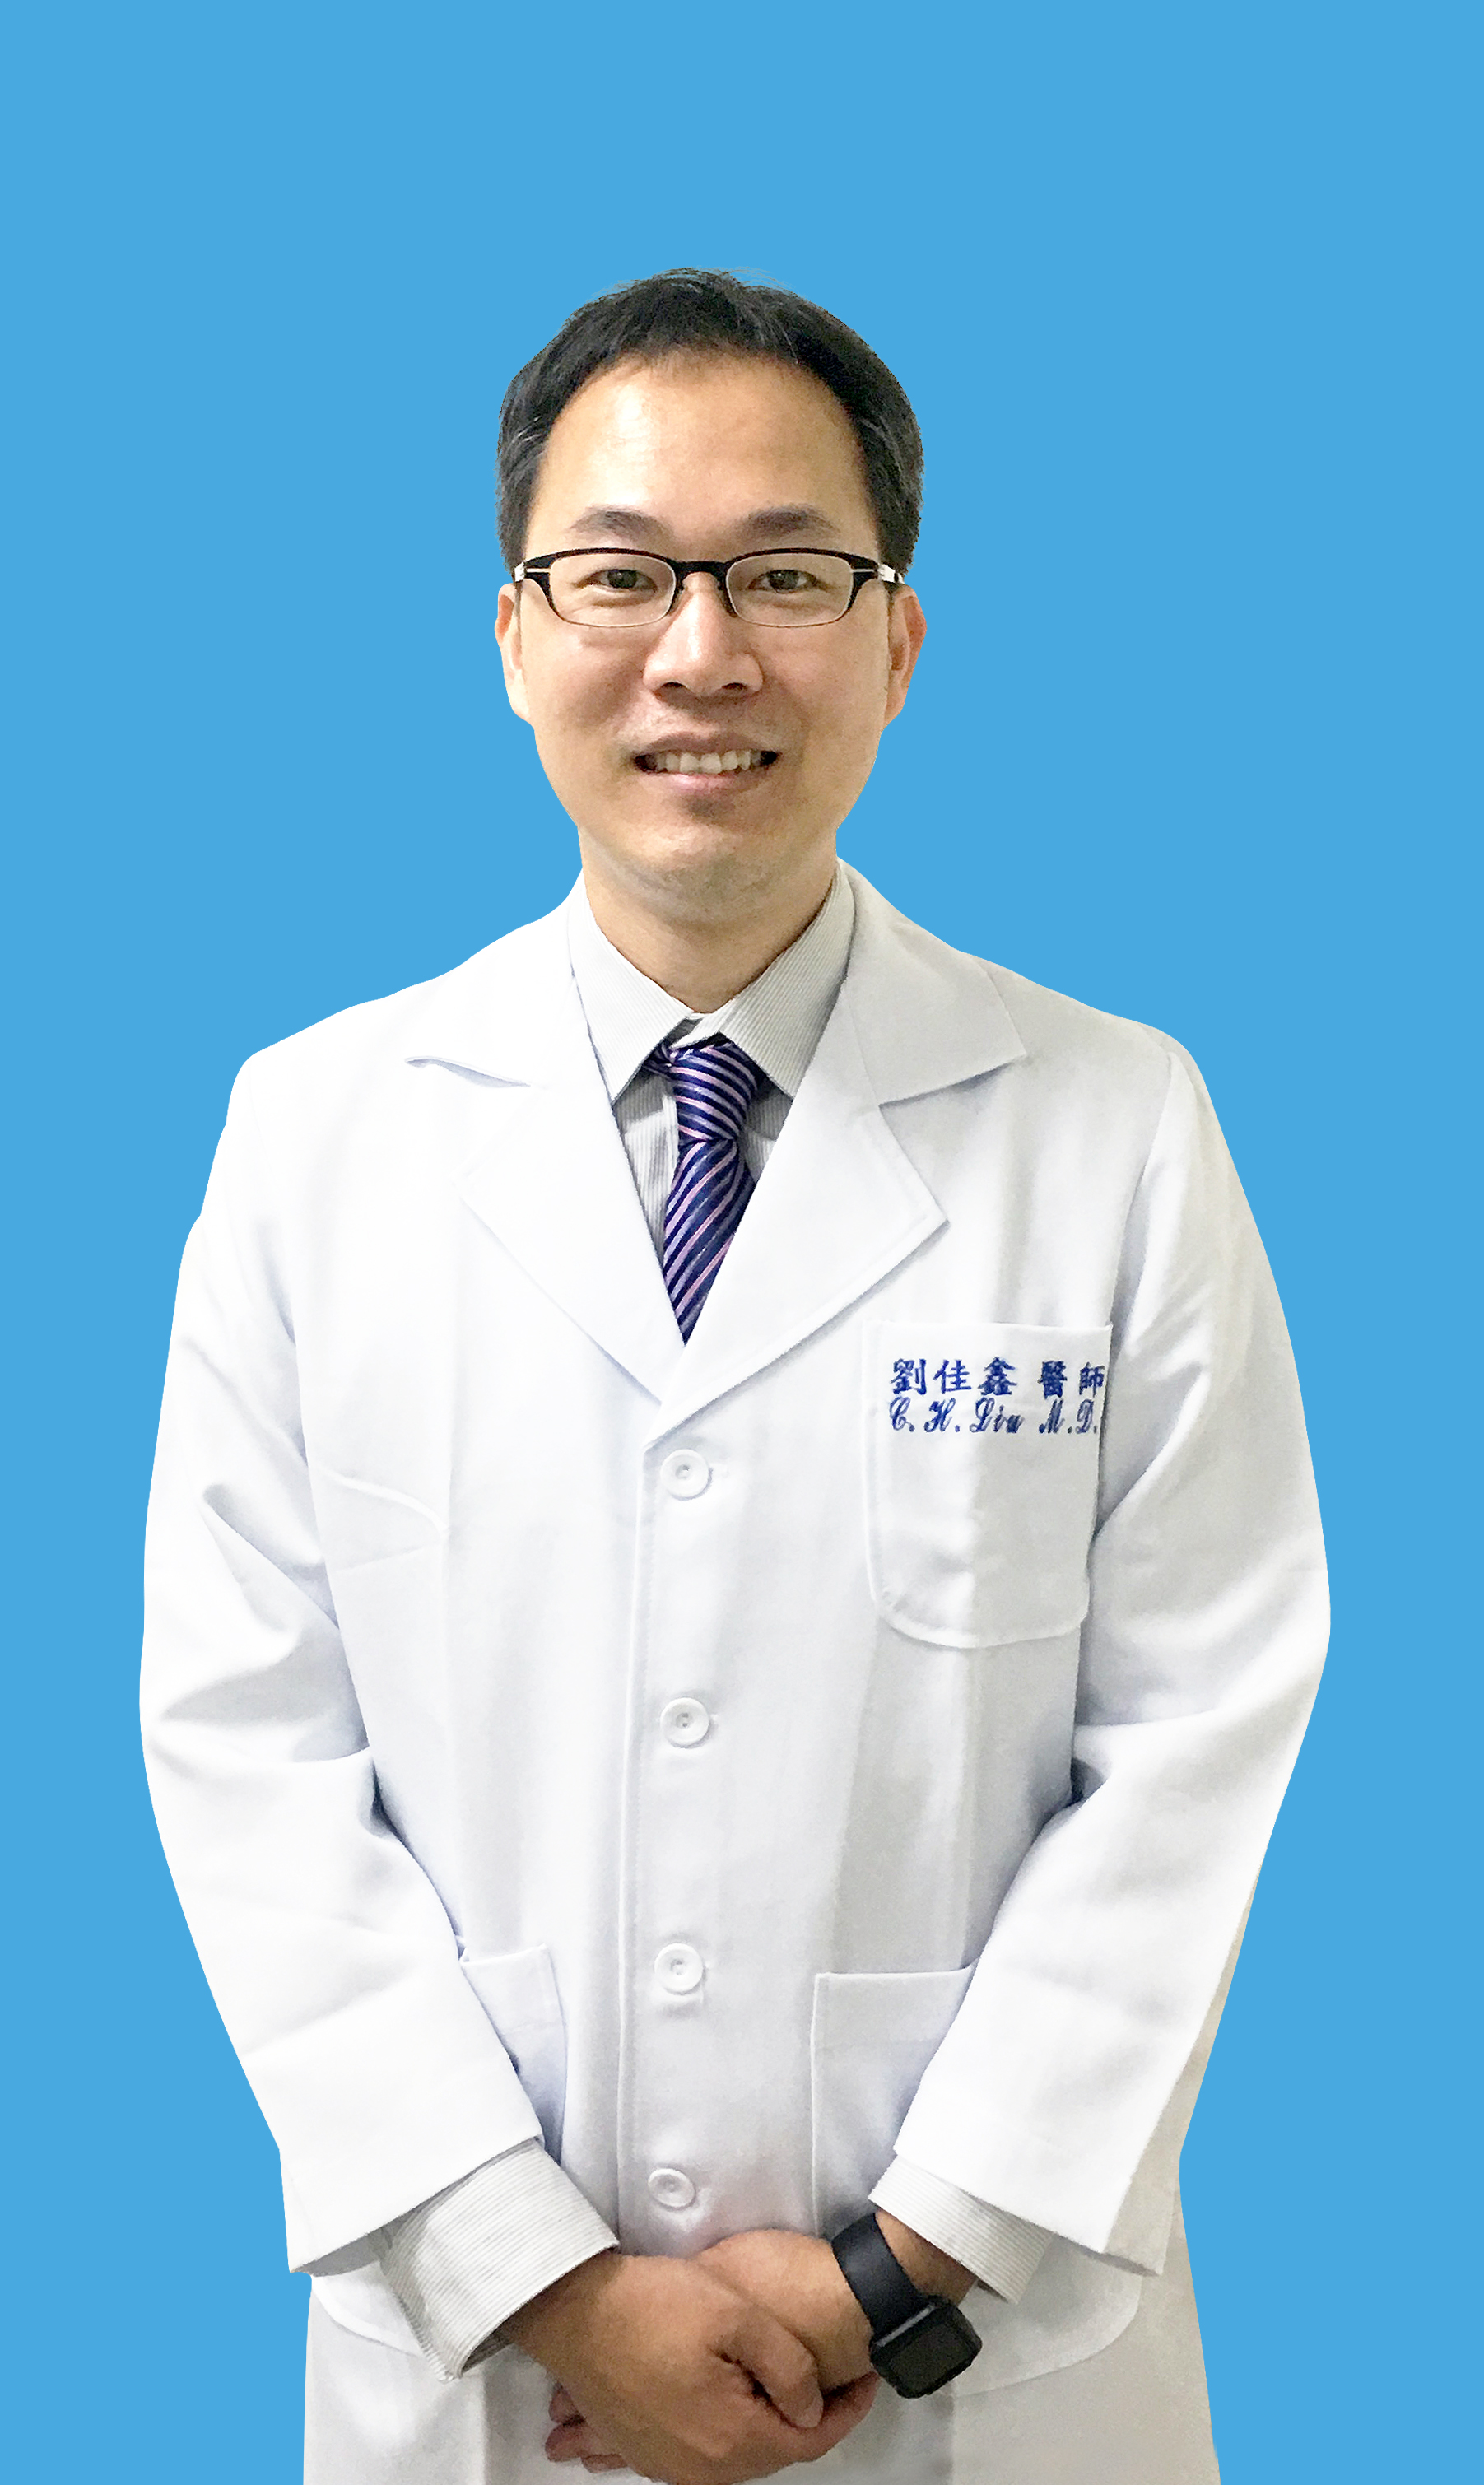 Chia-Hsin Liu  Attending physician